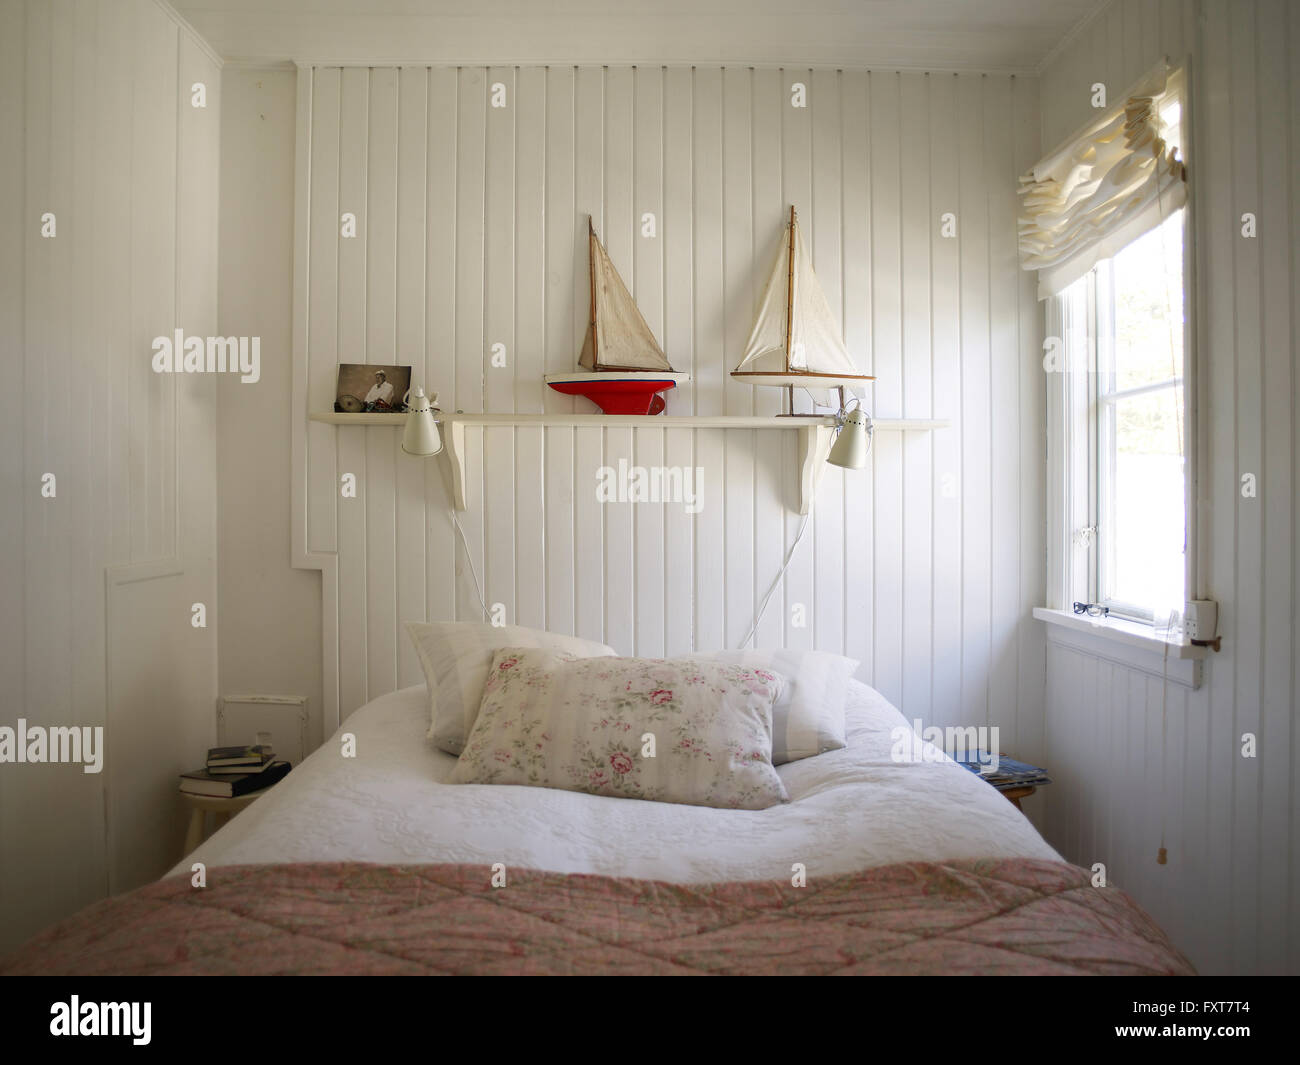 Chambre avec lit et lambris en bois blanc Photo Stock - Alamy